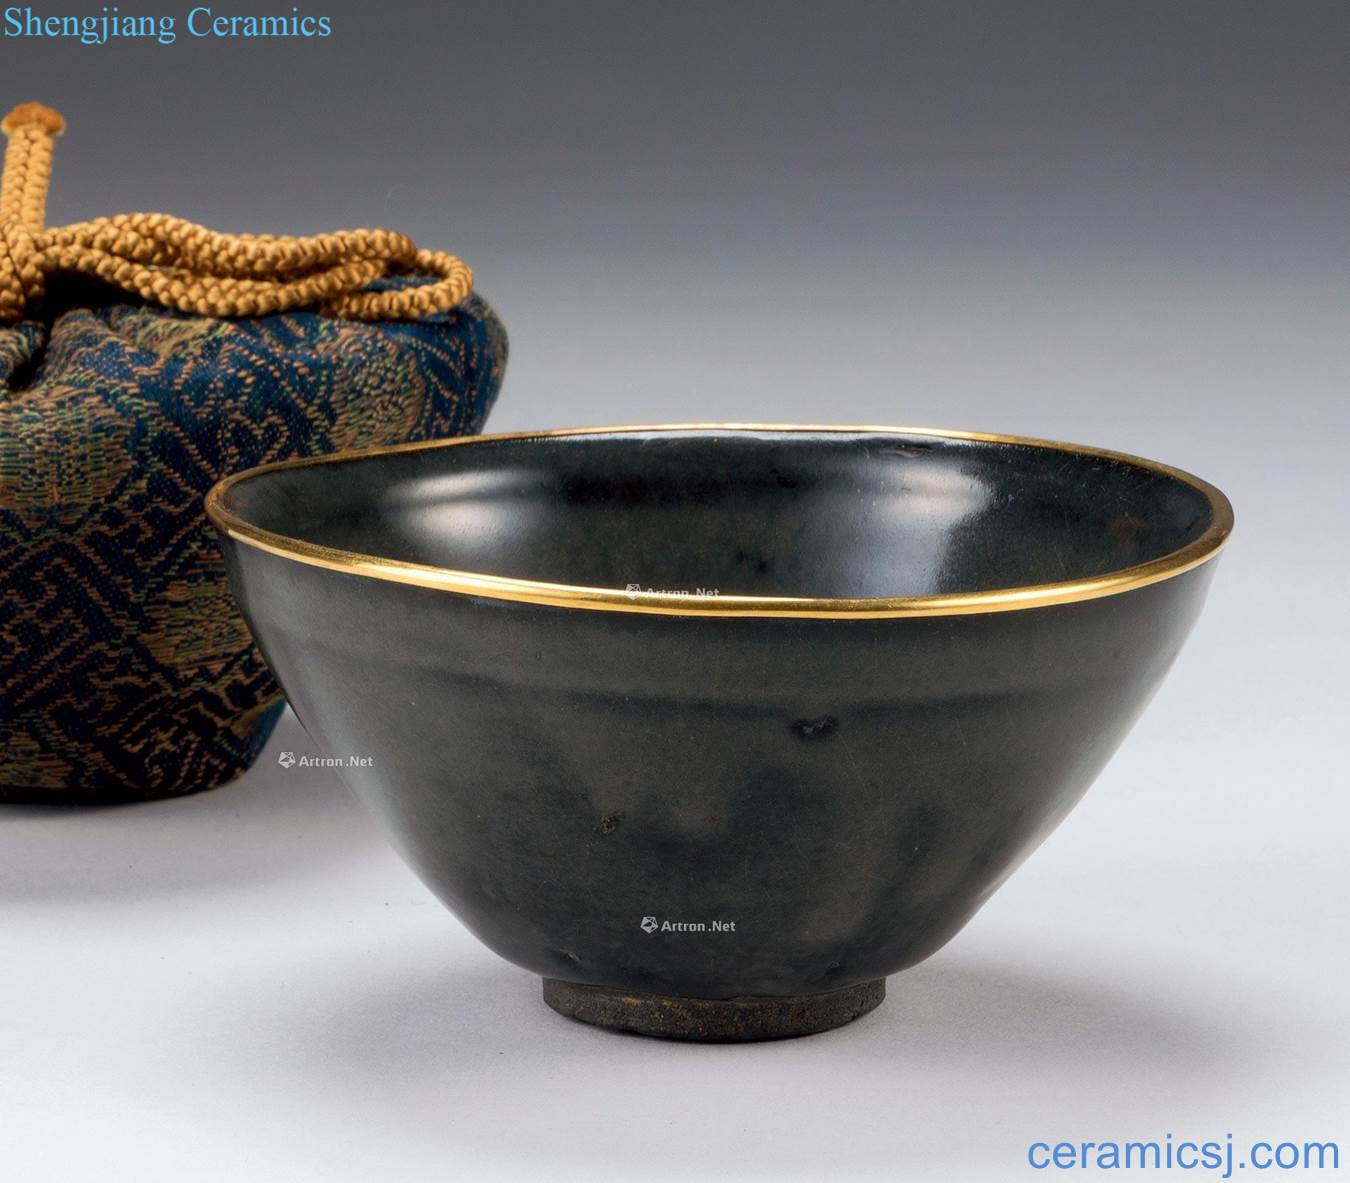 The song dynasty To build kilns temmoku grey bowl